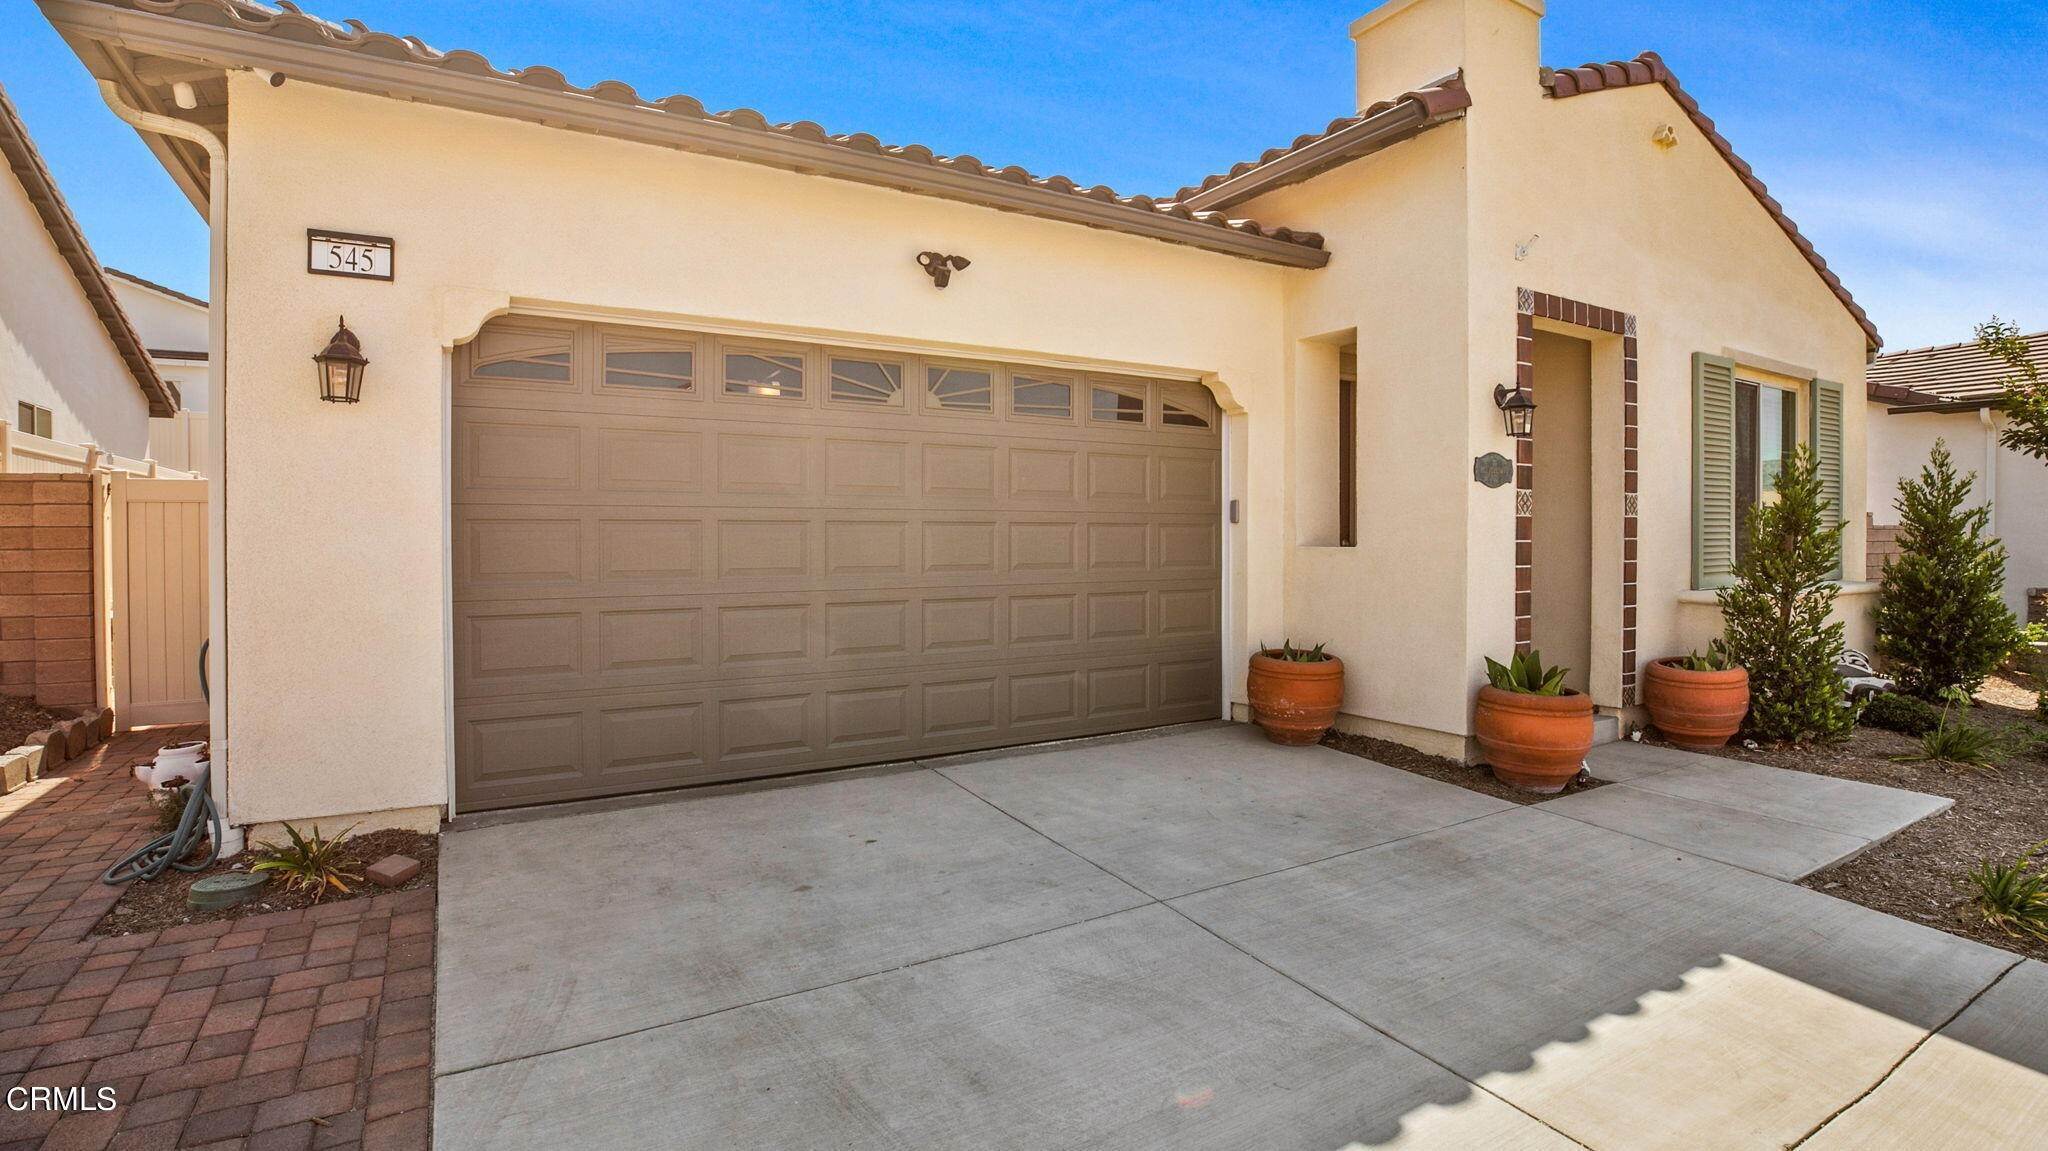 5. Single Family Homes for Sale at 545 Eureka Drive Santa Paula, California 93060 United States